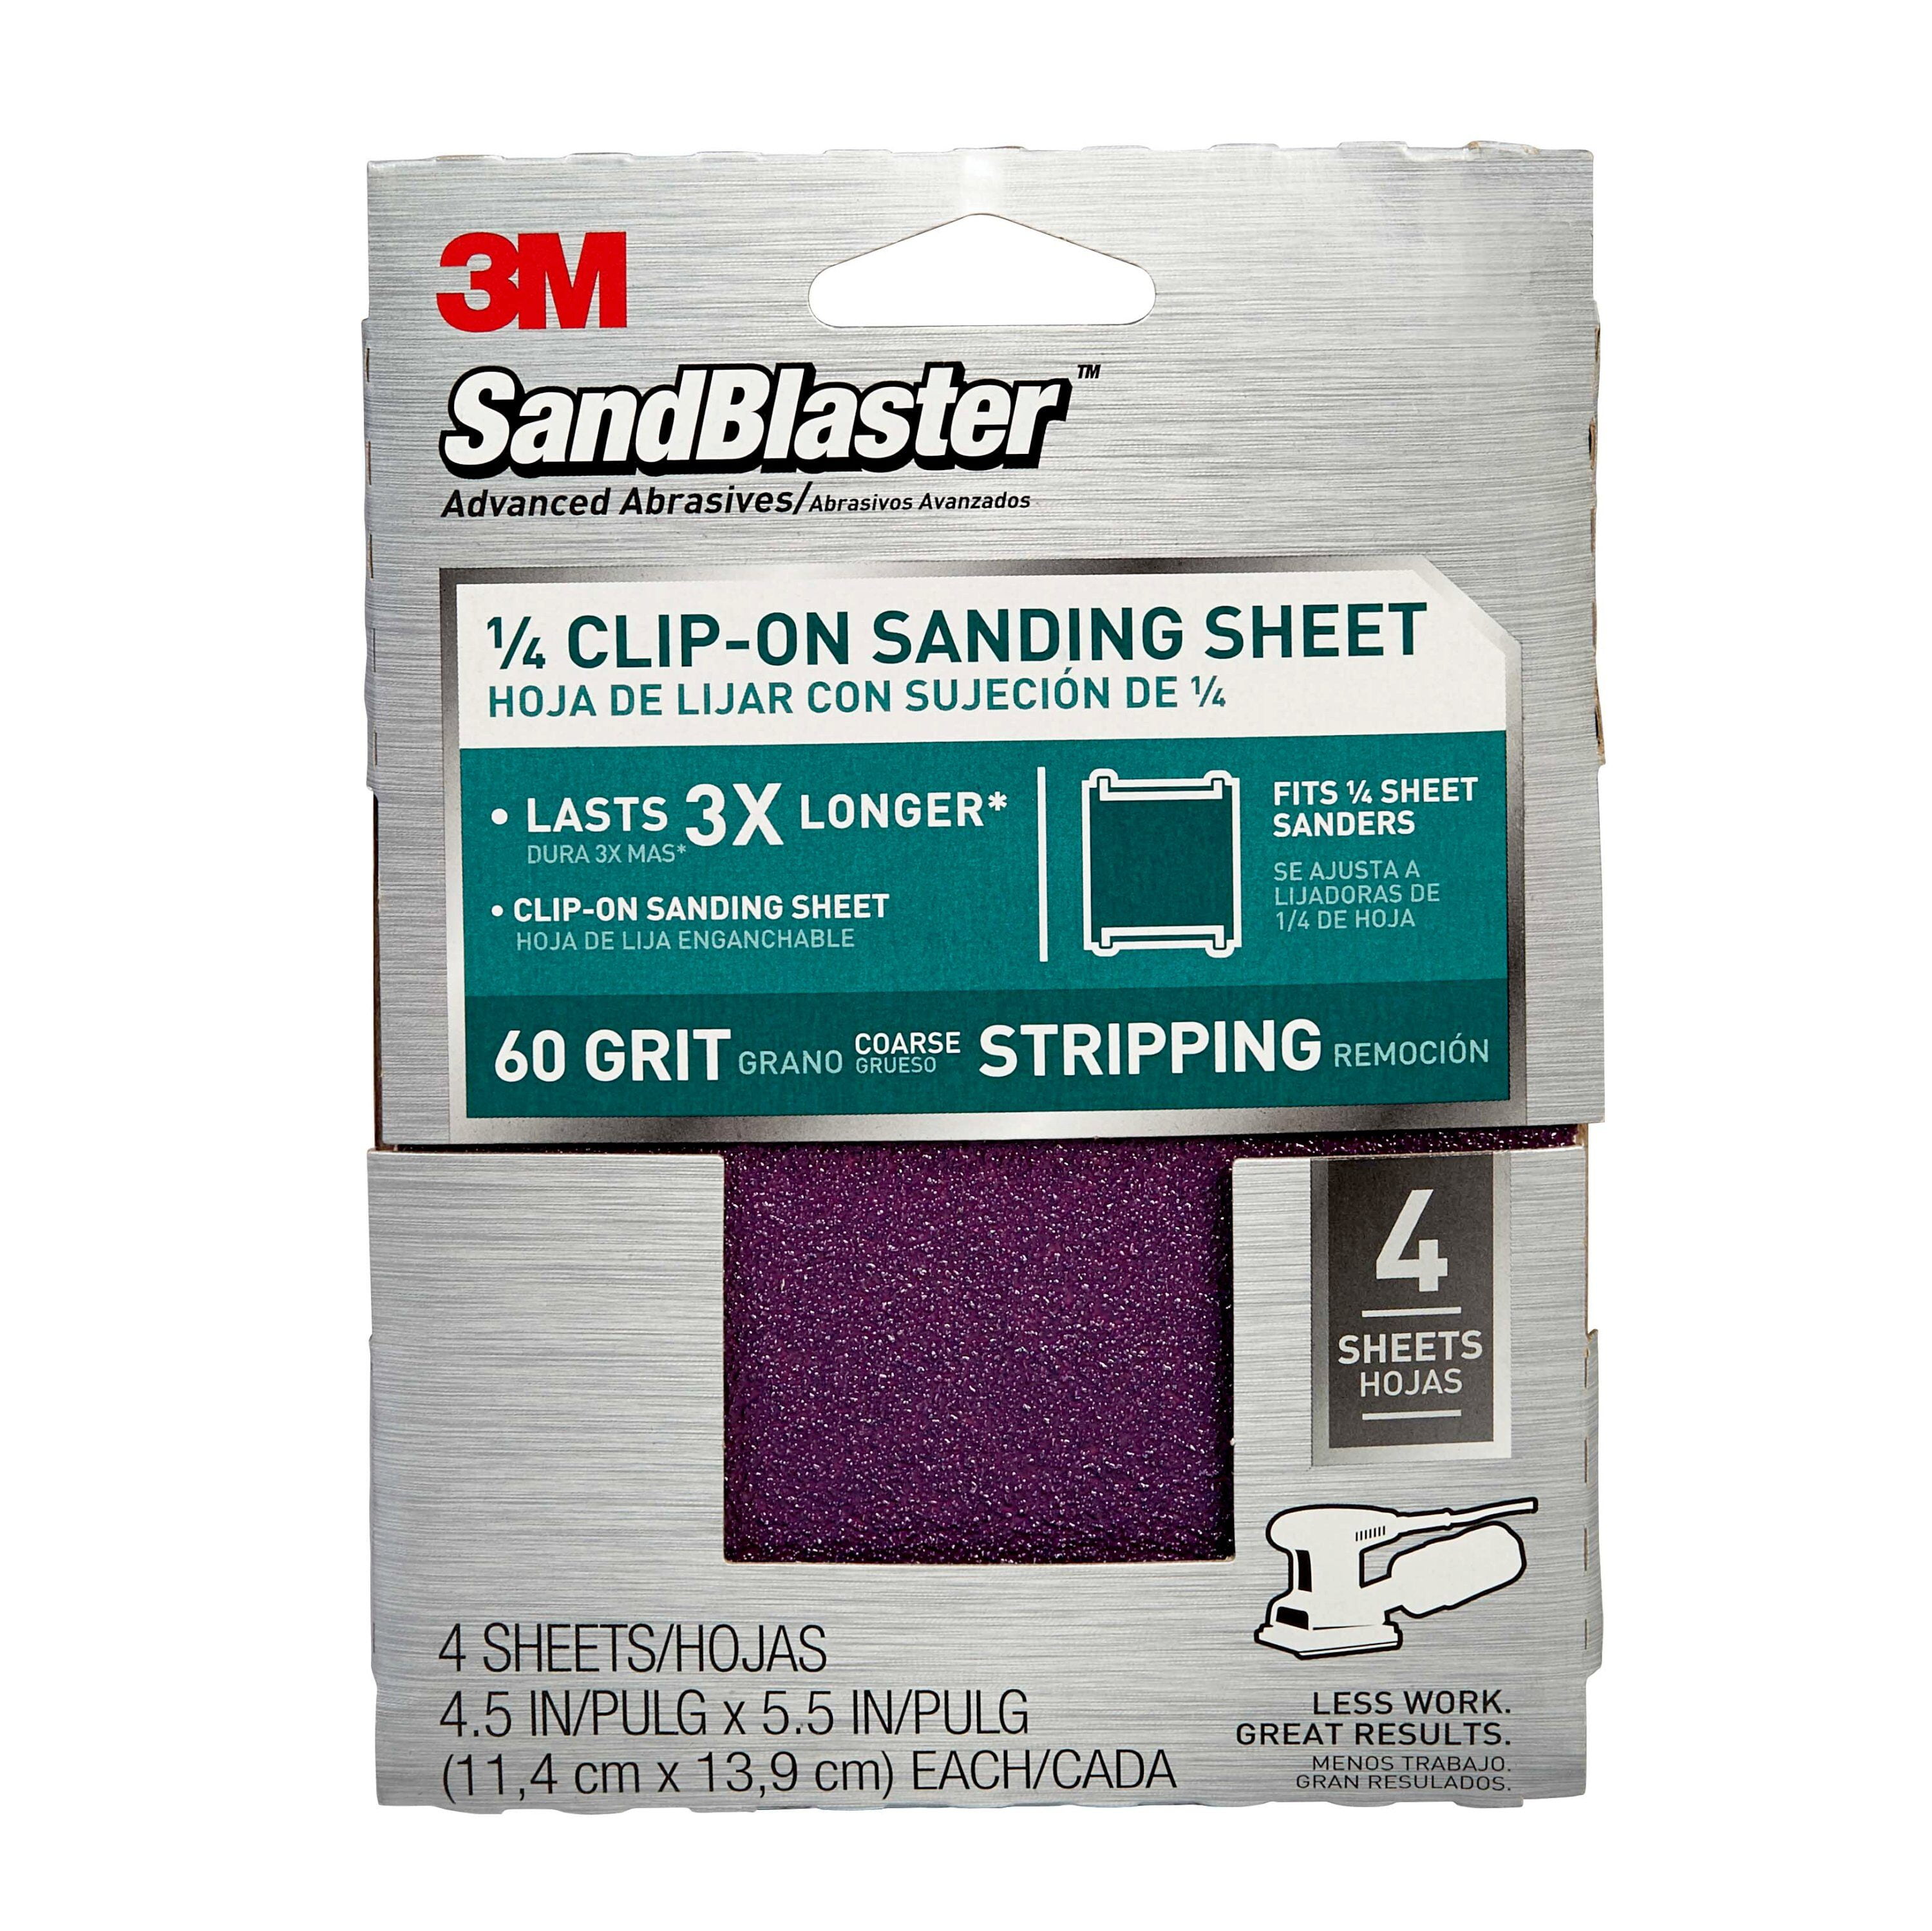 4.5" x 5.5" 100-Grit 25-Pack Gator 5132 1/4 Sheet Clamp-On Sandpaper